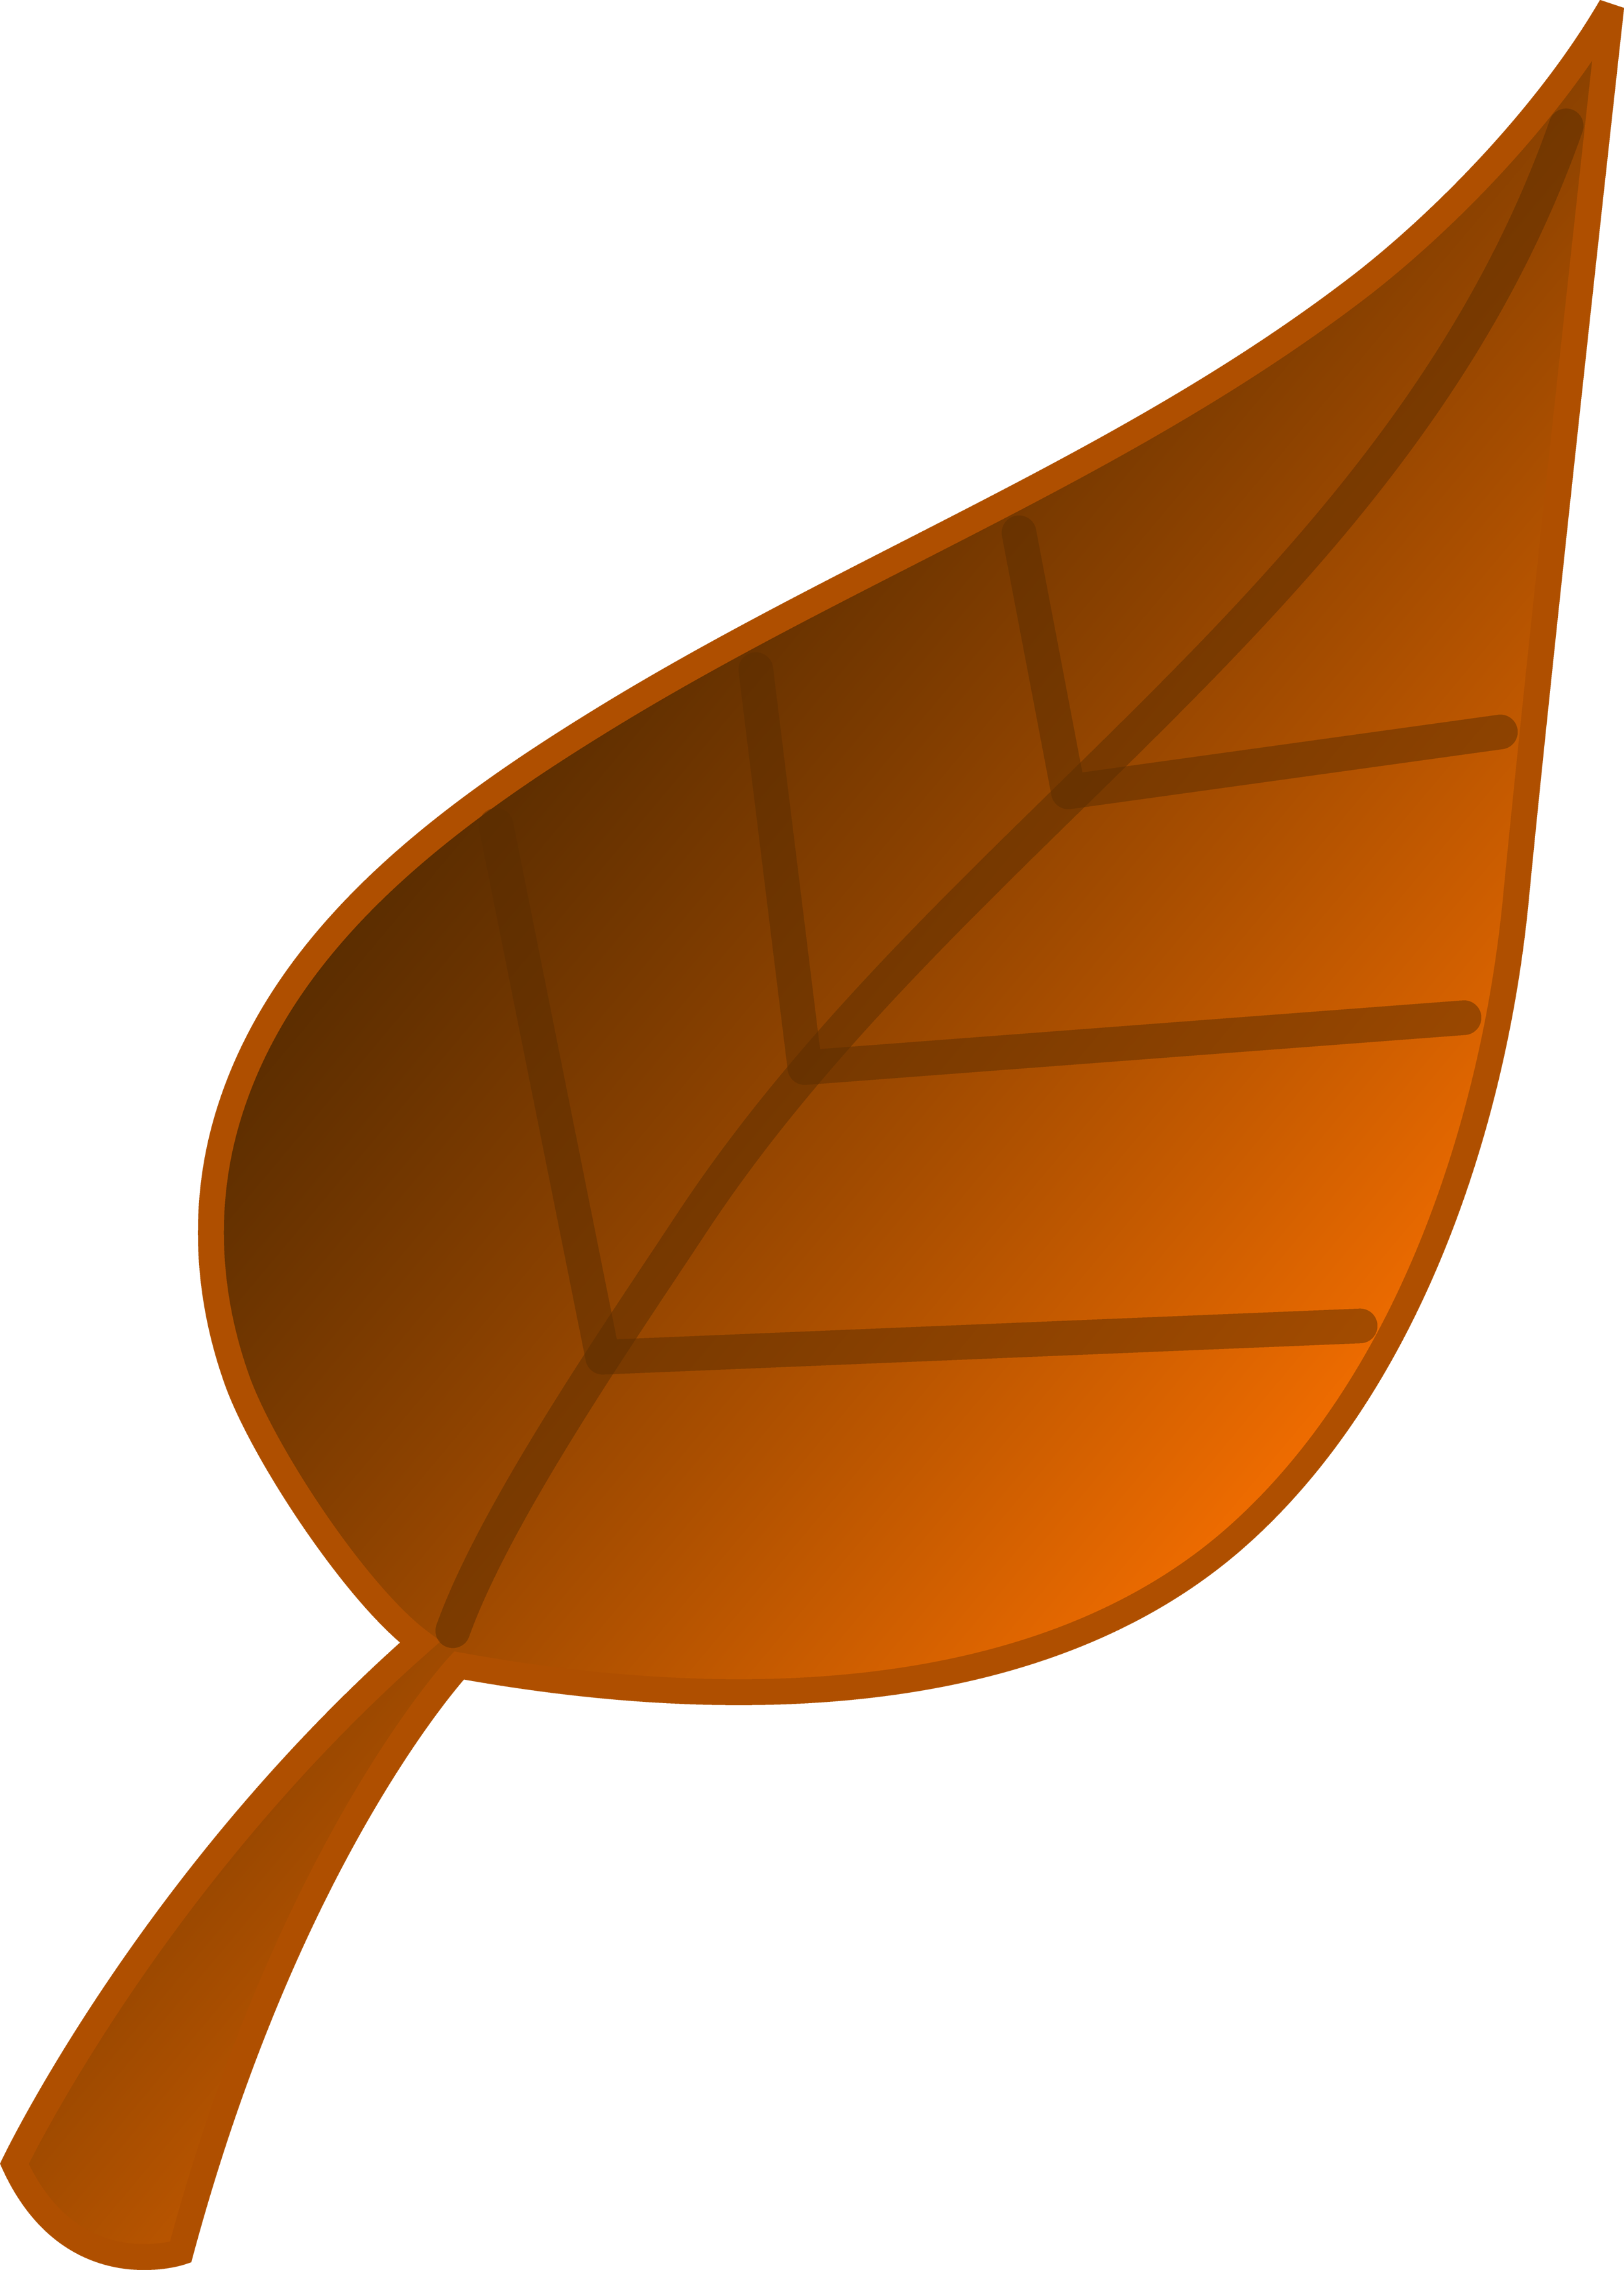 Orange Leaves Clip Art | Clipart Panda - Free Clipart Images